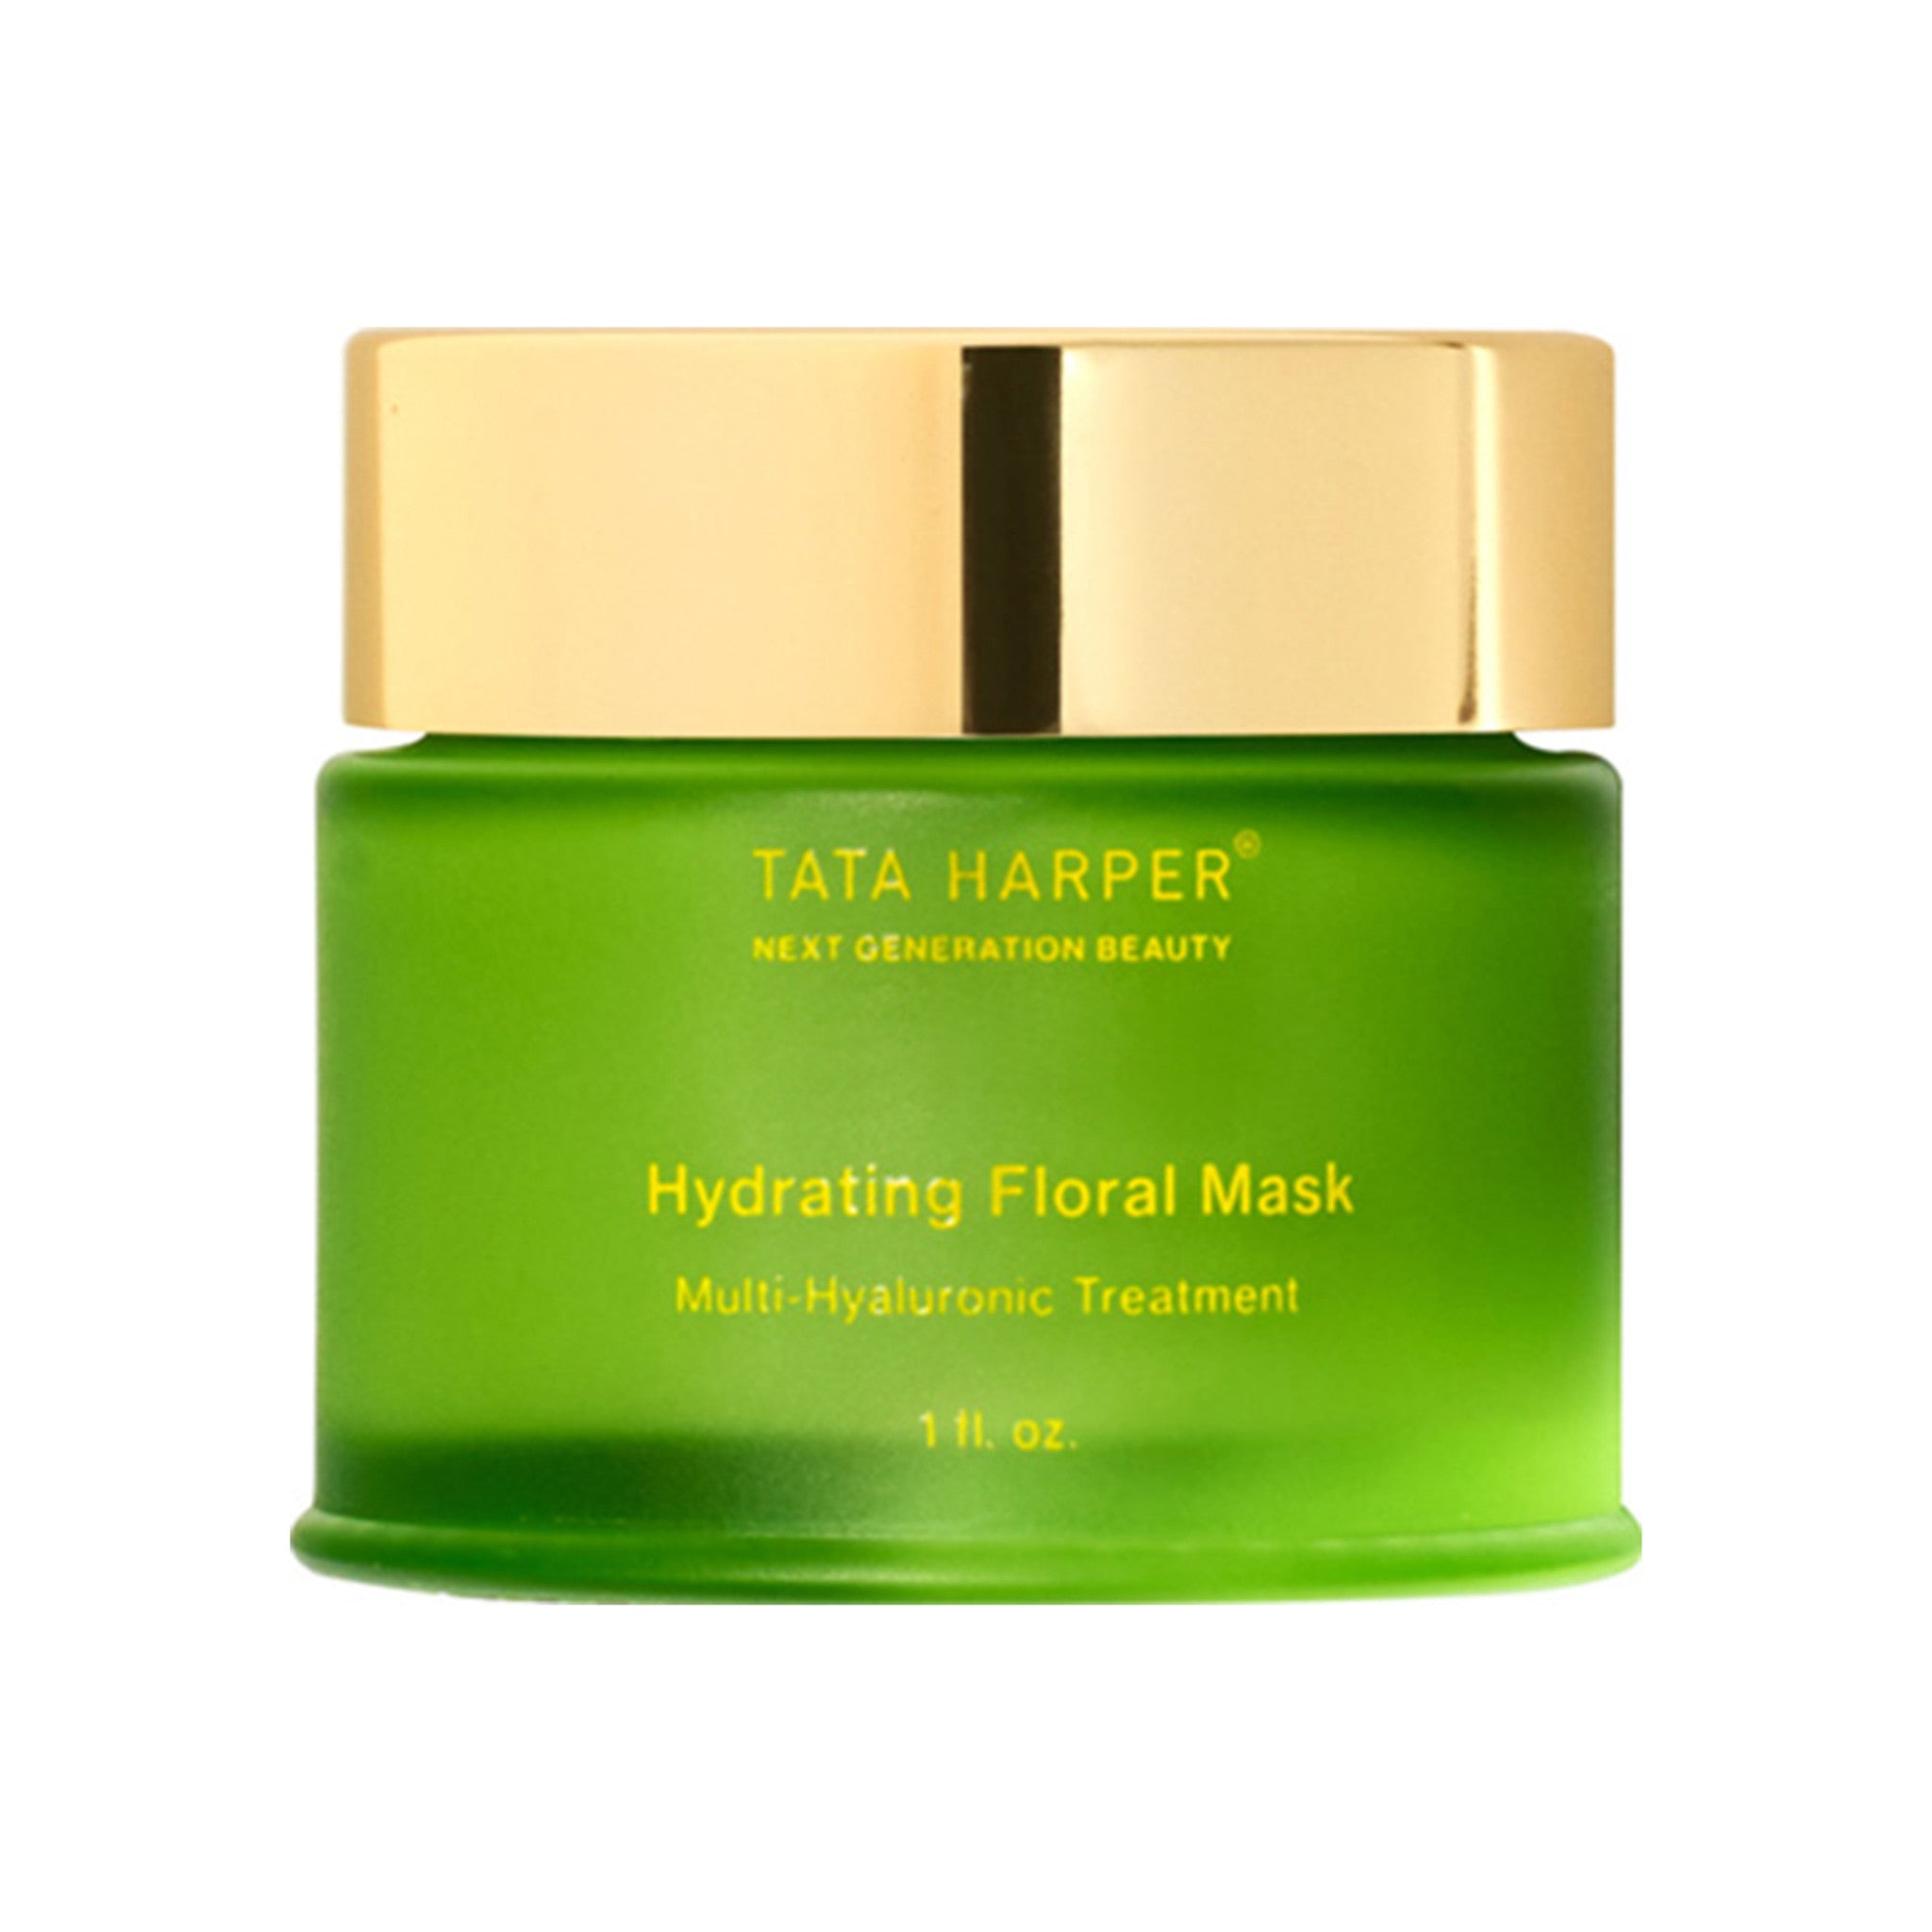 Tata Harper Hydrating Floral Mask main image.